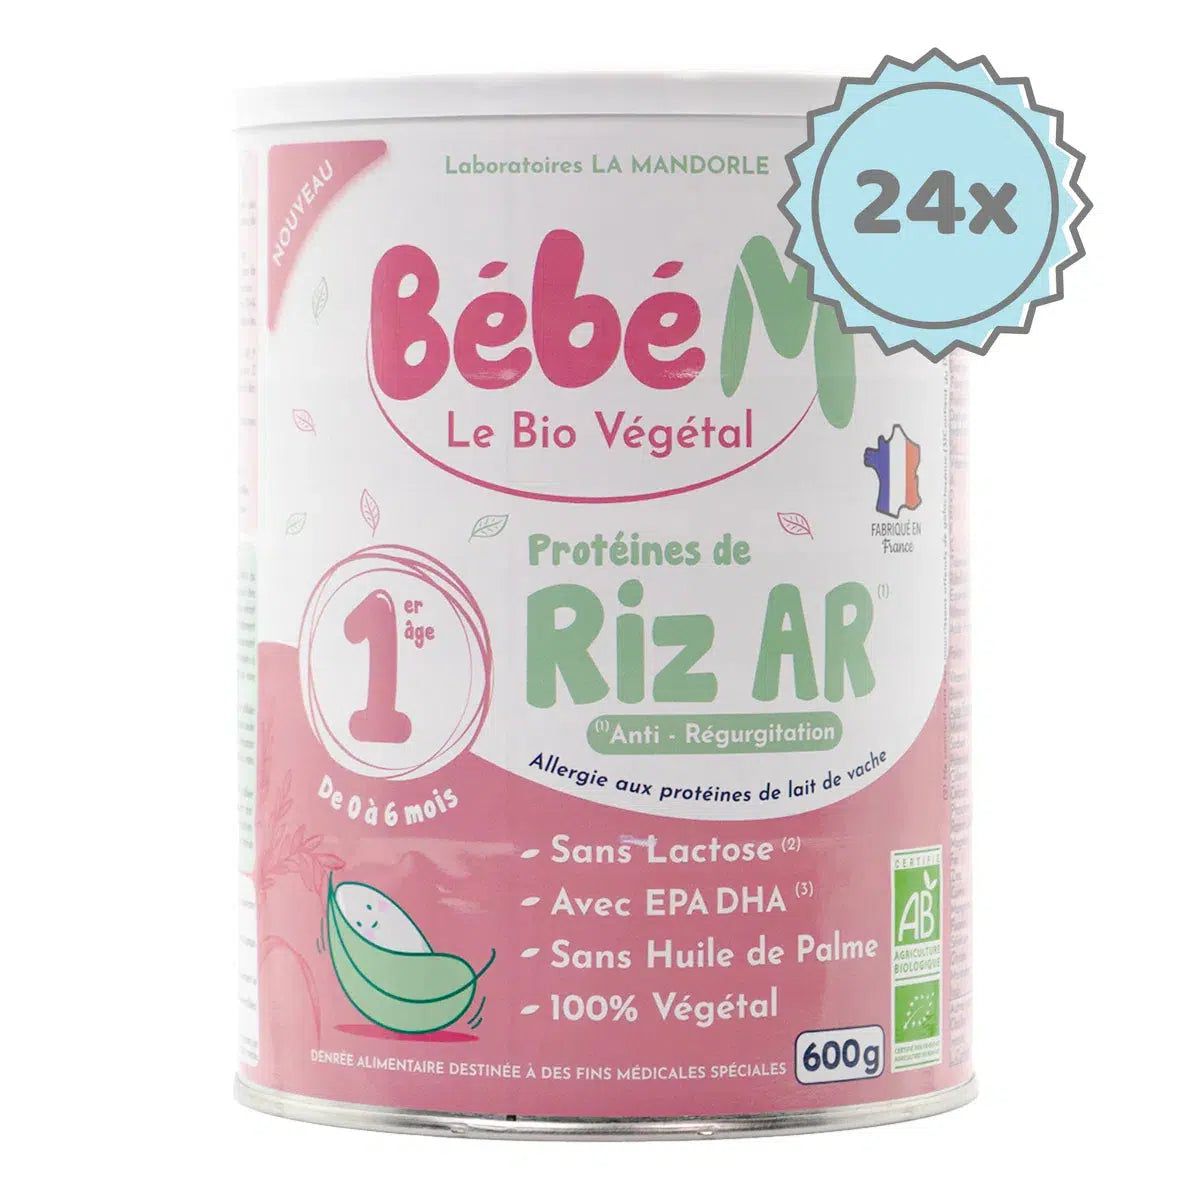 Bebe M (Bebe Mandorle) Organic Anti-Reflux Rice-Based Infant Formula - Stage 1 (0 to 6 months) | Organic Baby Formula | 24 cans